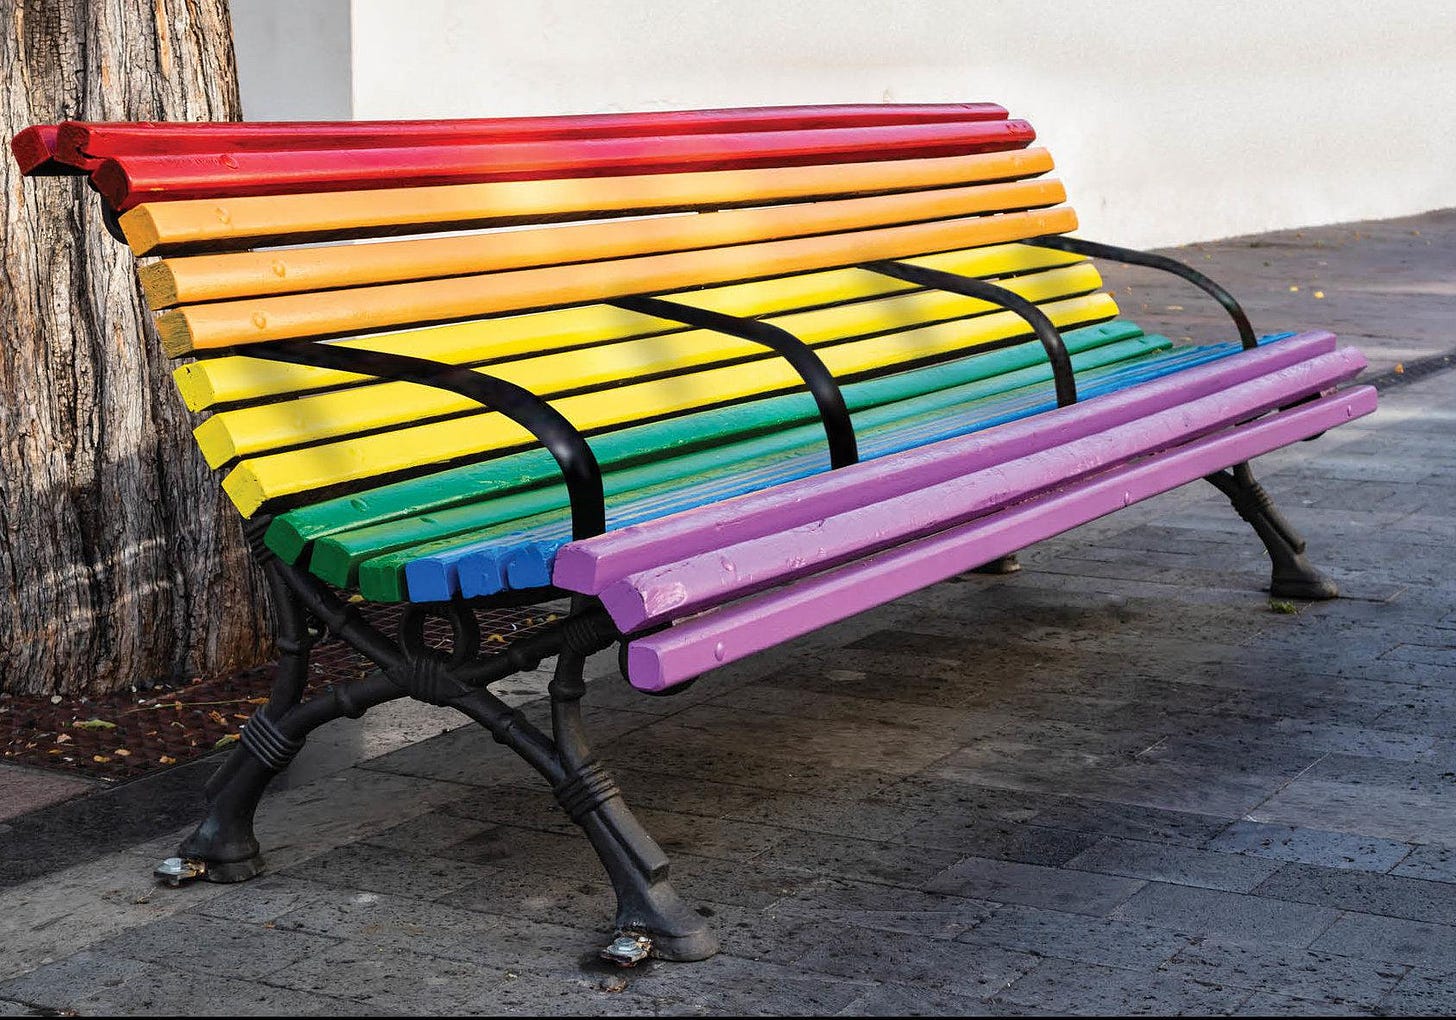 This Pride rainbow anti-homeless bench. : r/pics